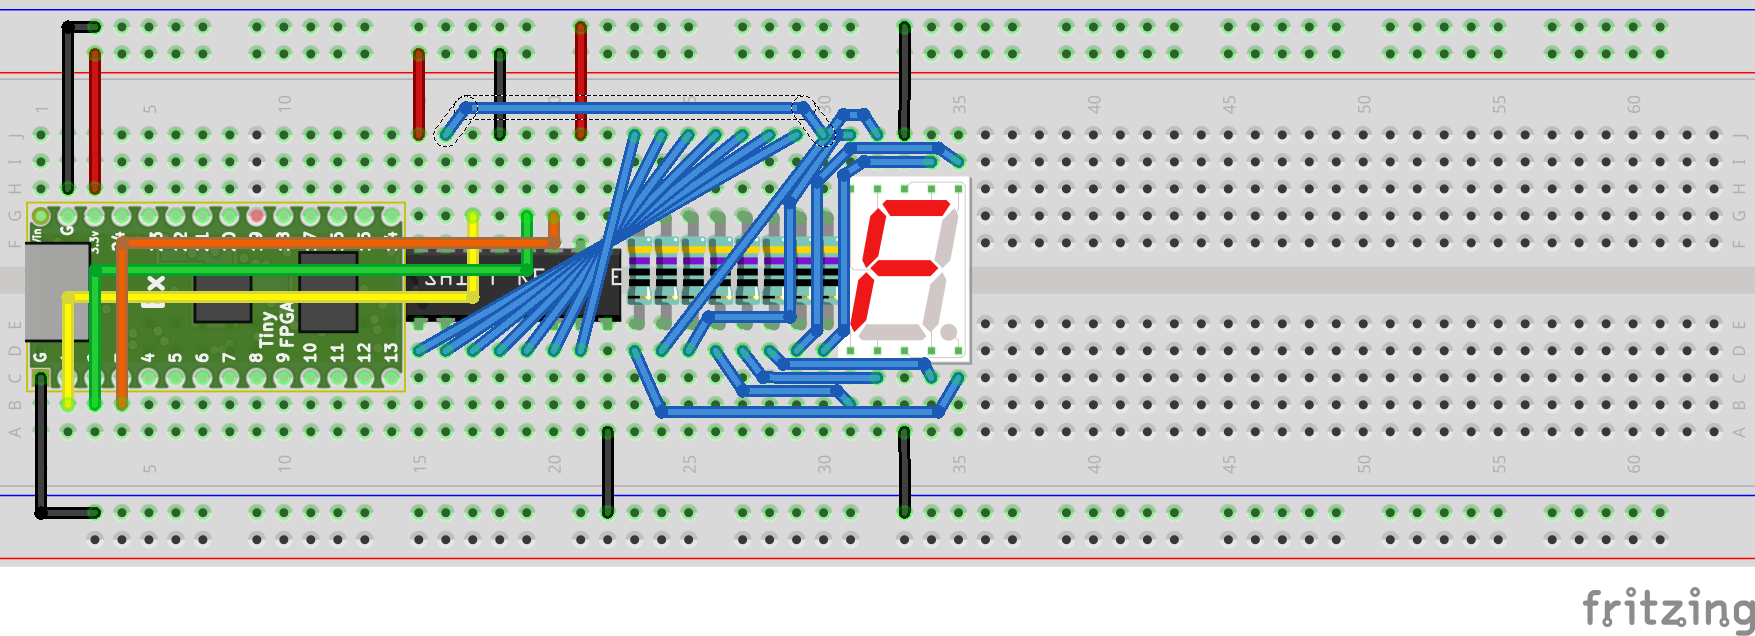 Shift Register Seven Segment Display Breadboard Circuit